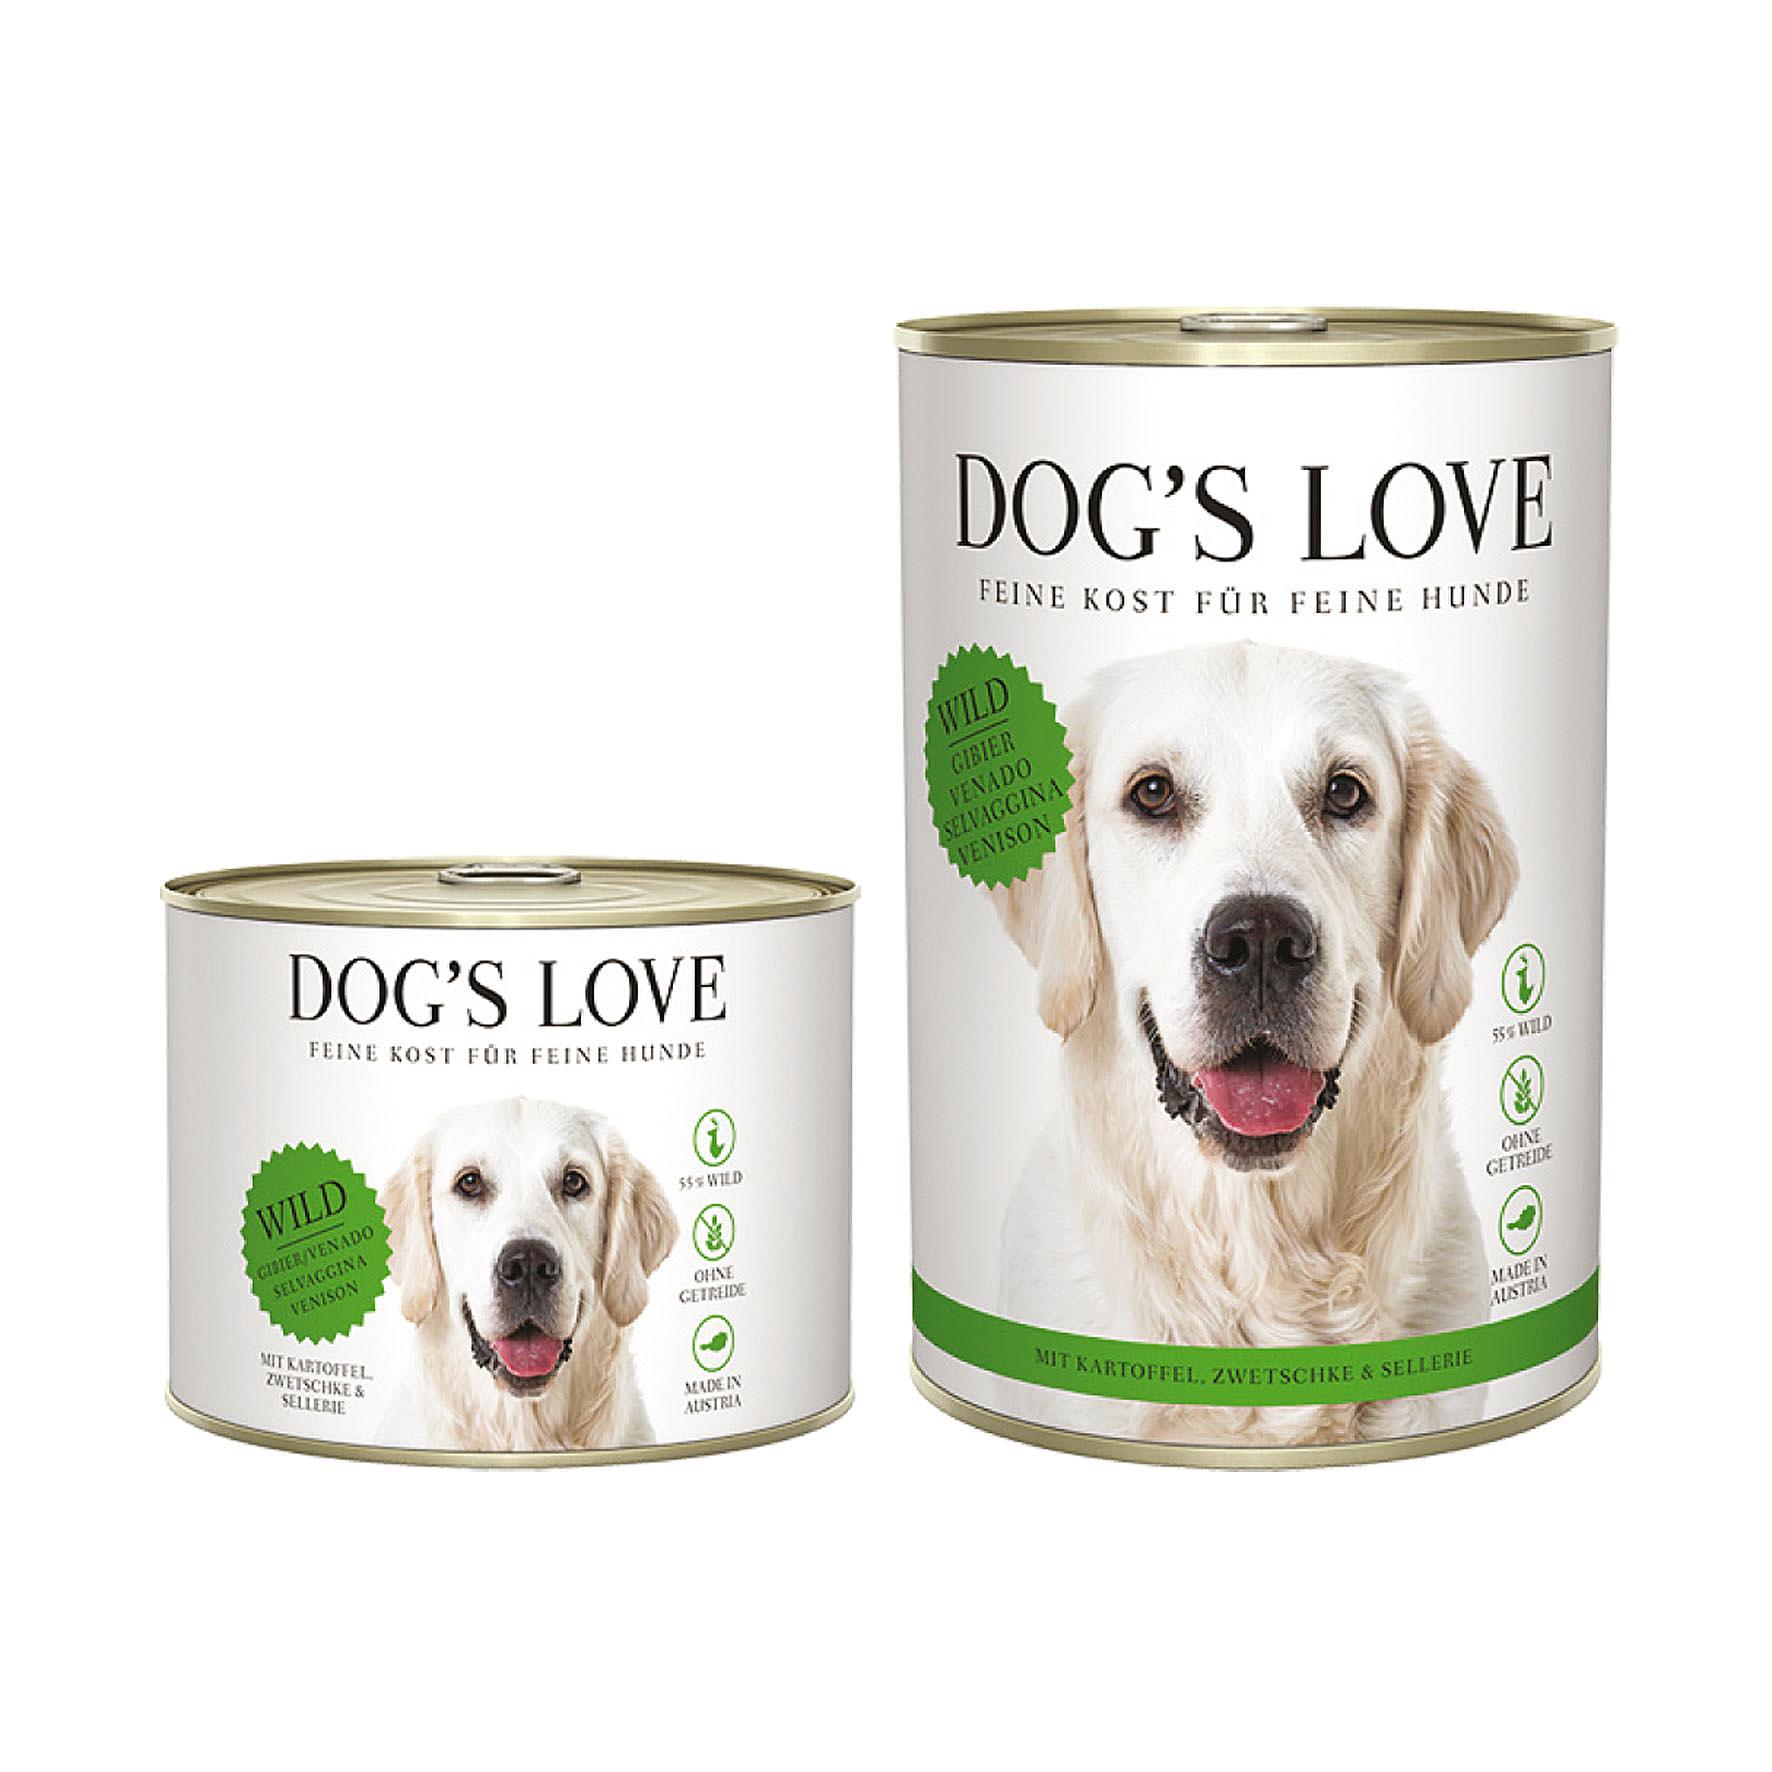 Dog‘s Love Classic Adult gibier, pomme de terre, prunes & céleri